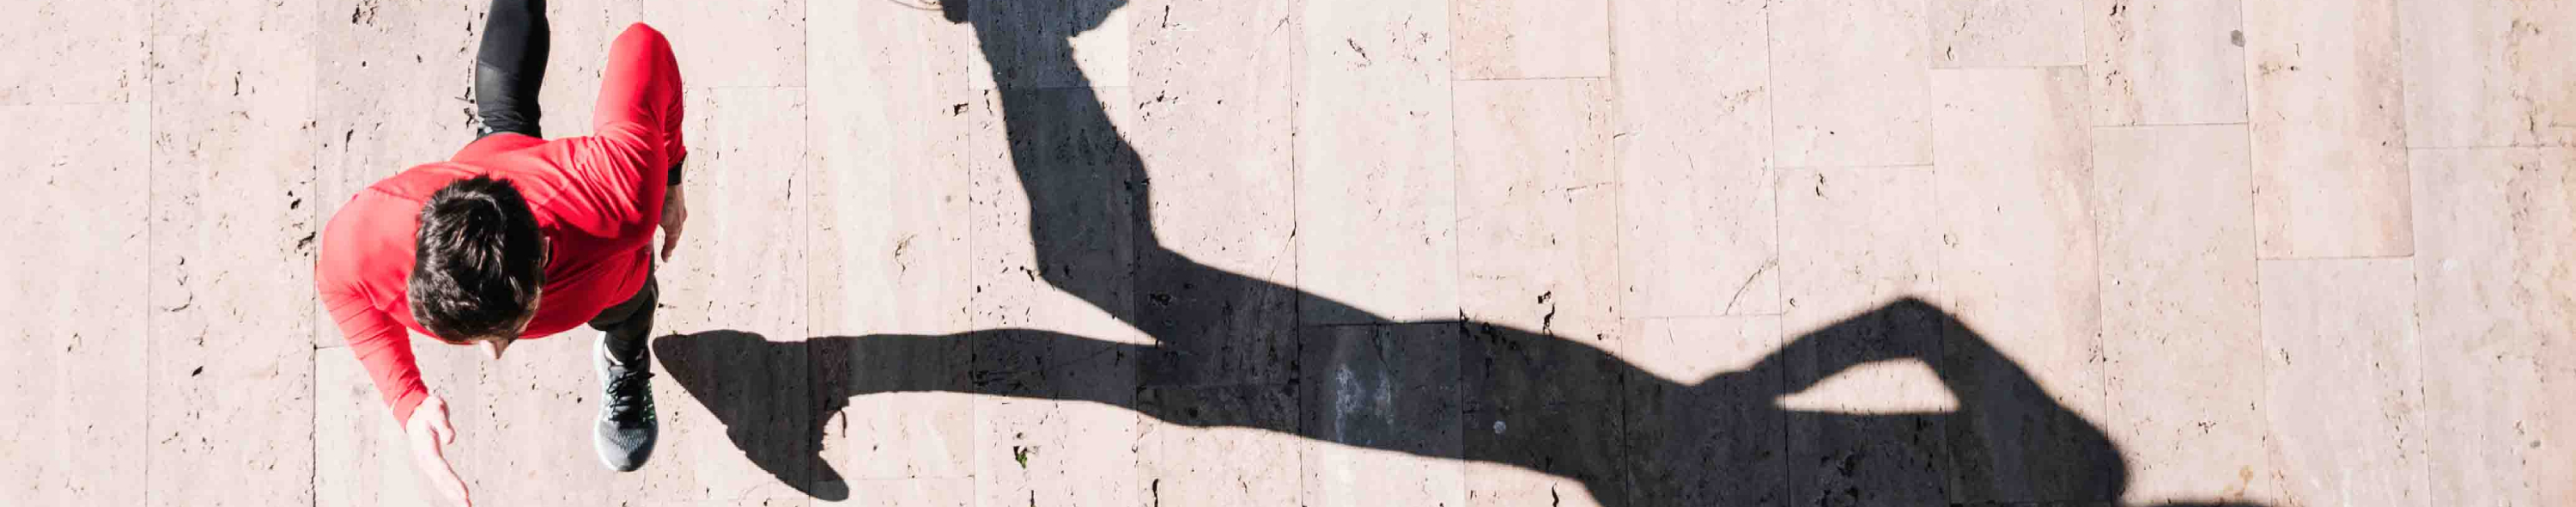 Man running shadow